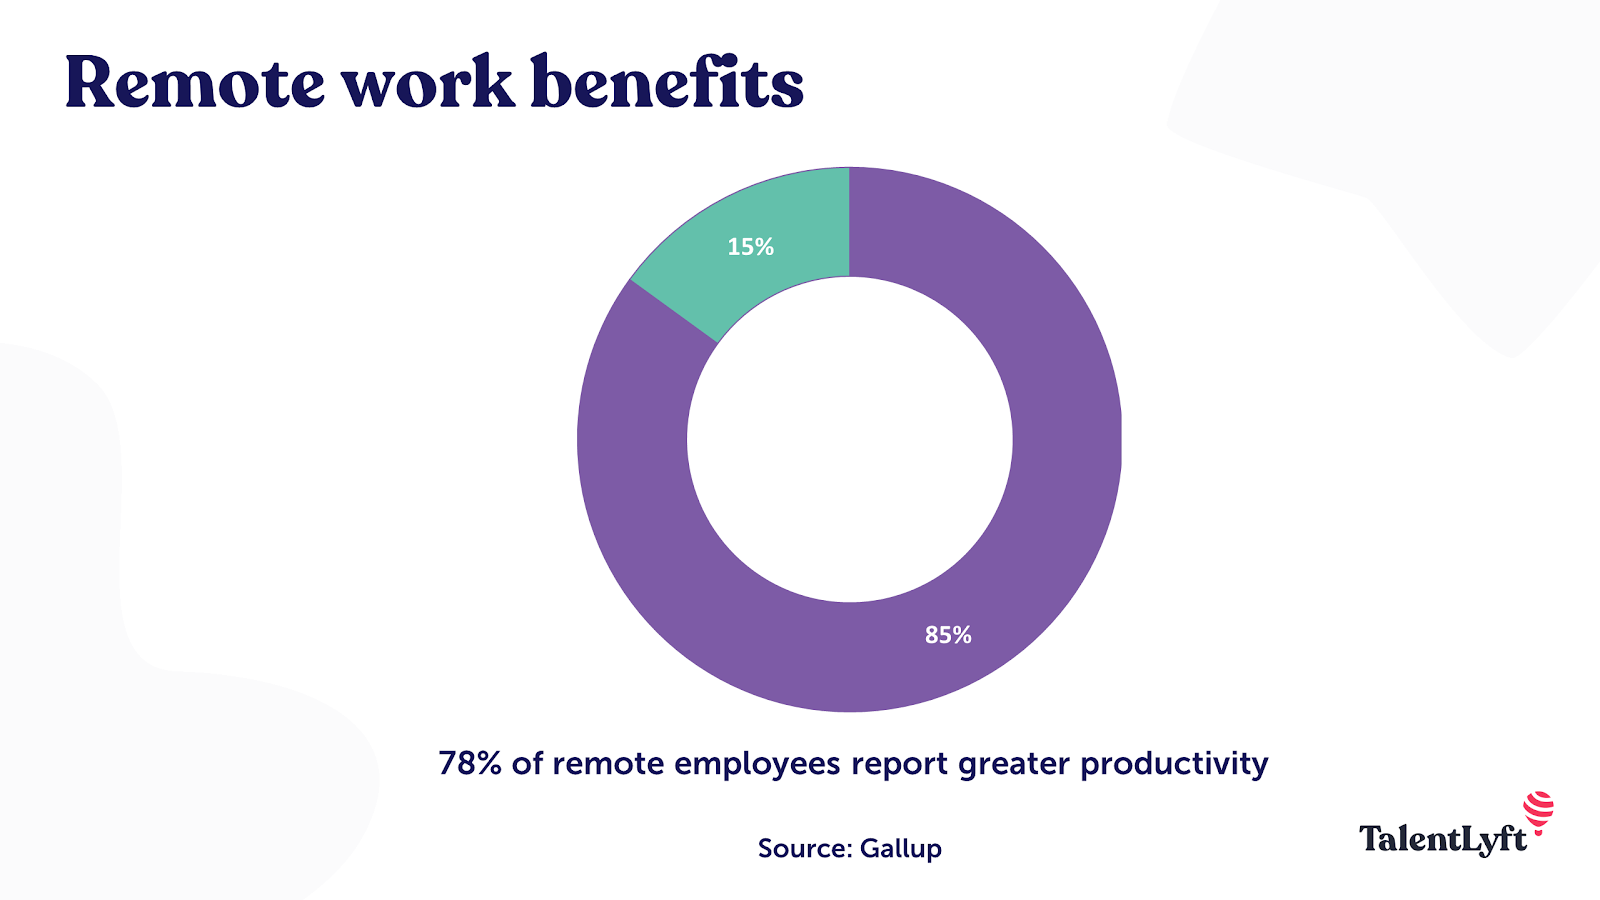 Remote work benefit - higher productivity